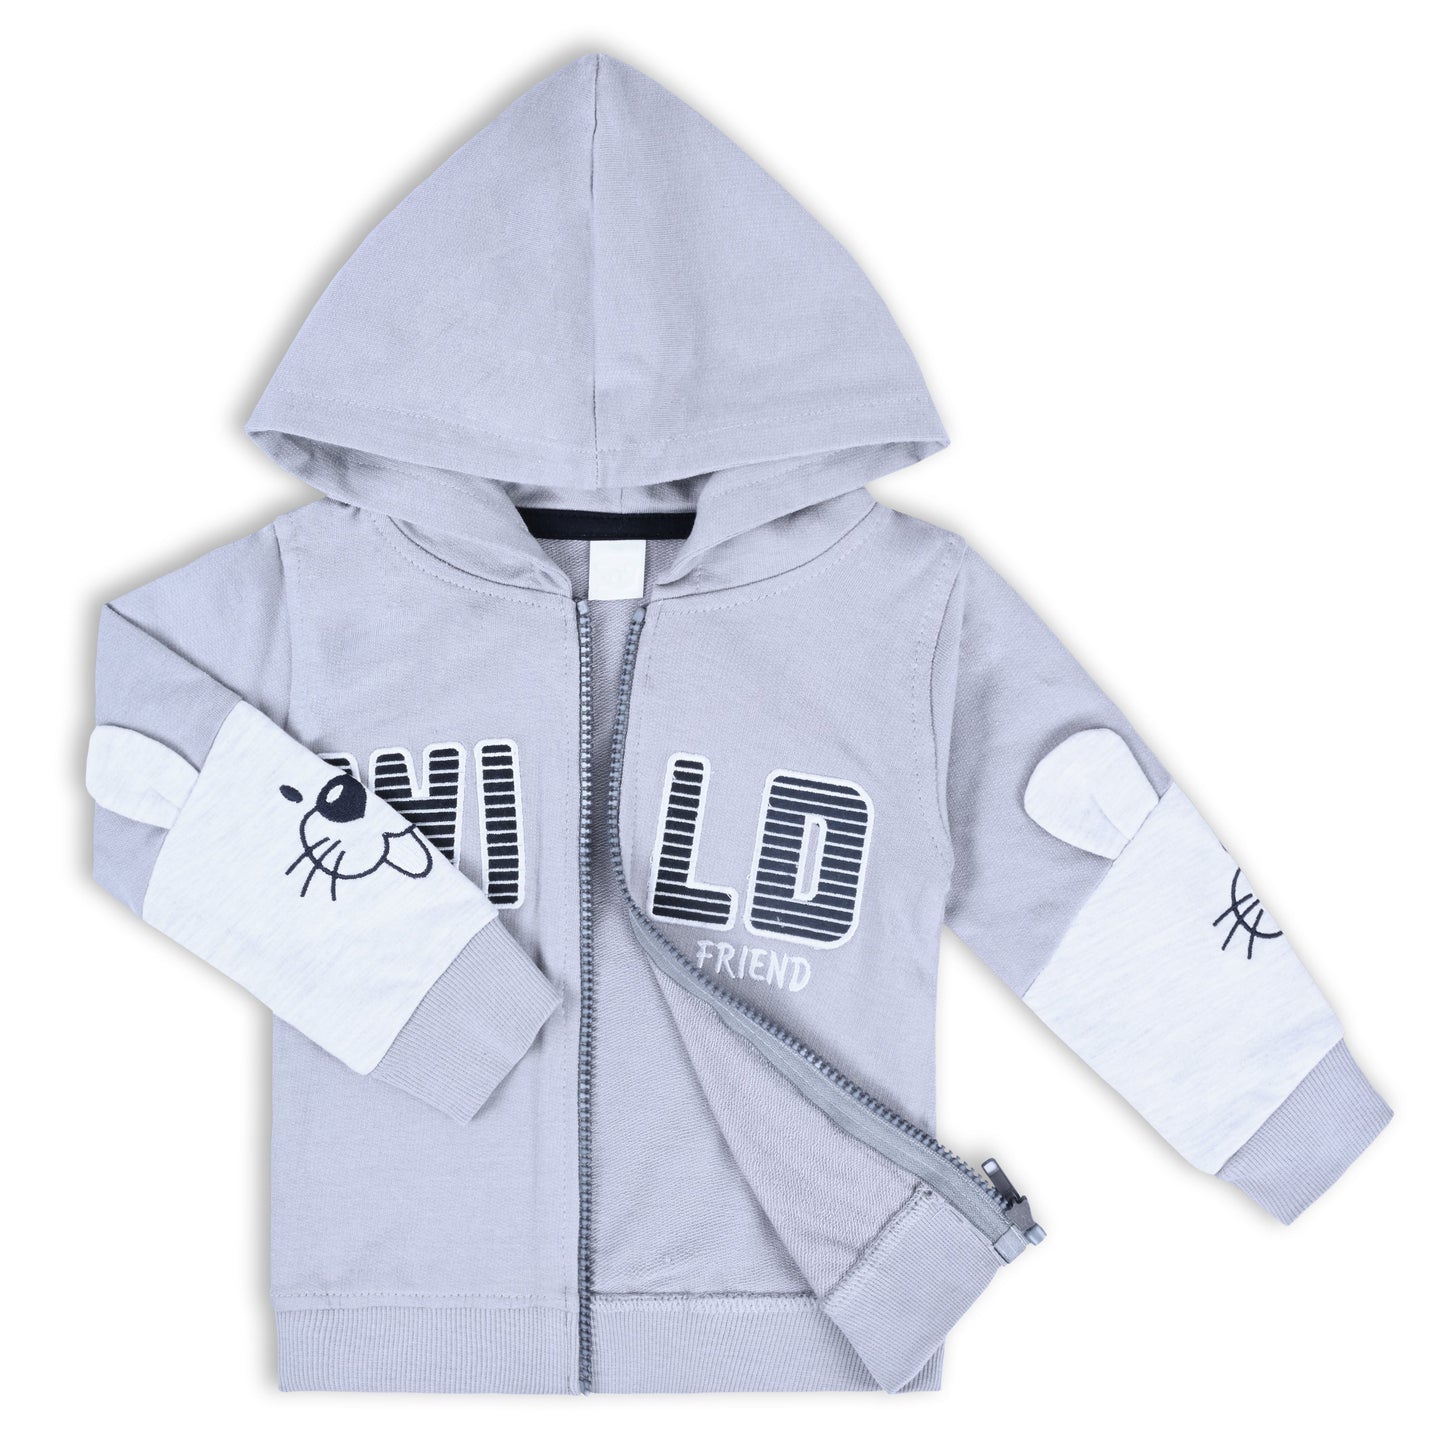 Wishkaro Unisex Cotton Applique Full Sleeve Hooded Sweatshirt-T301gry